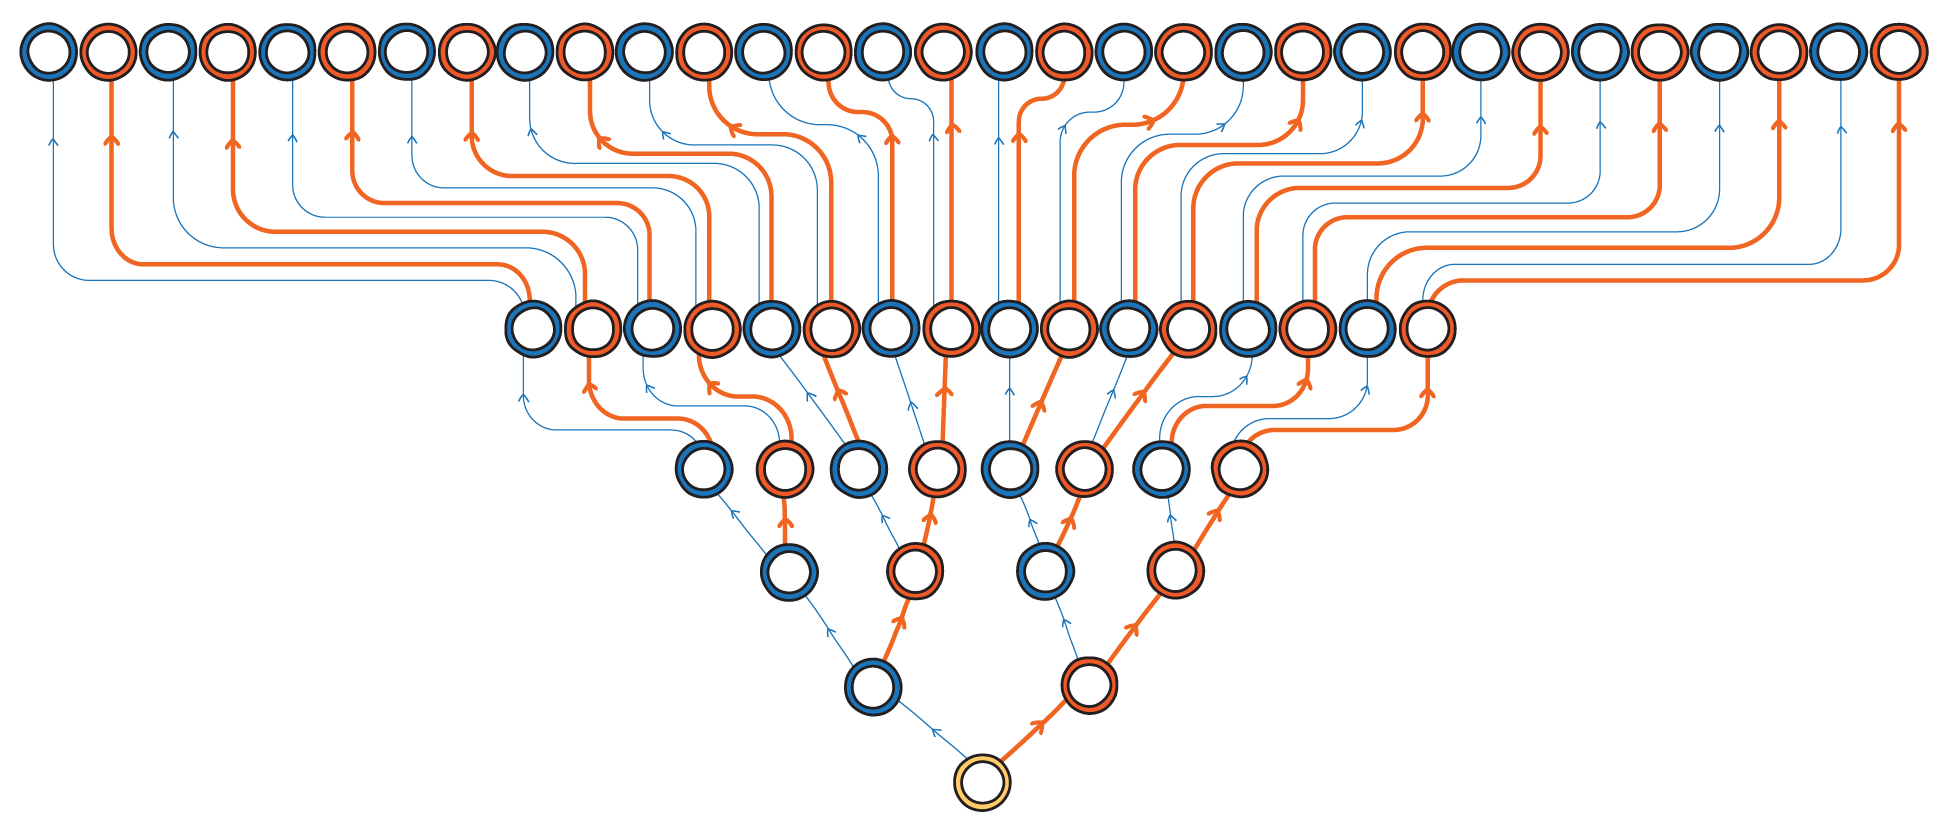 A large, balanced binary search tree.